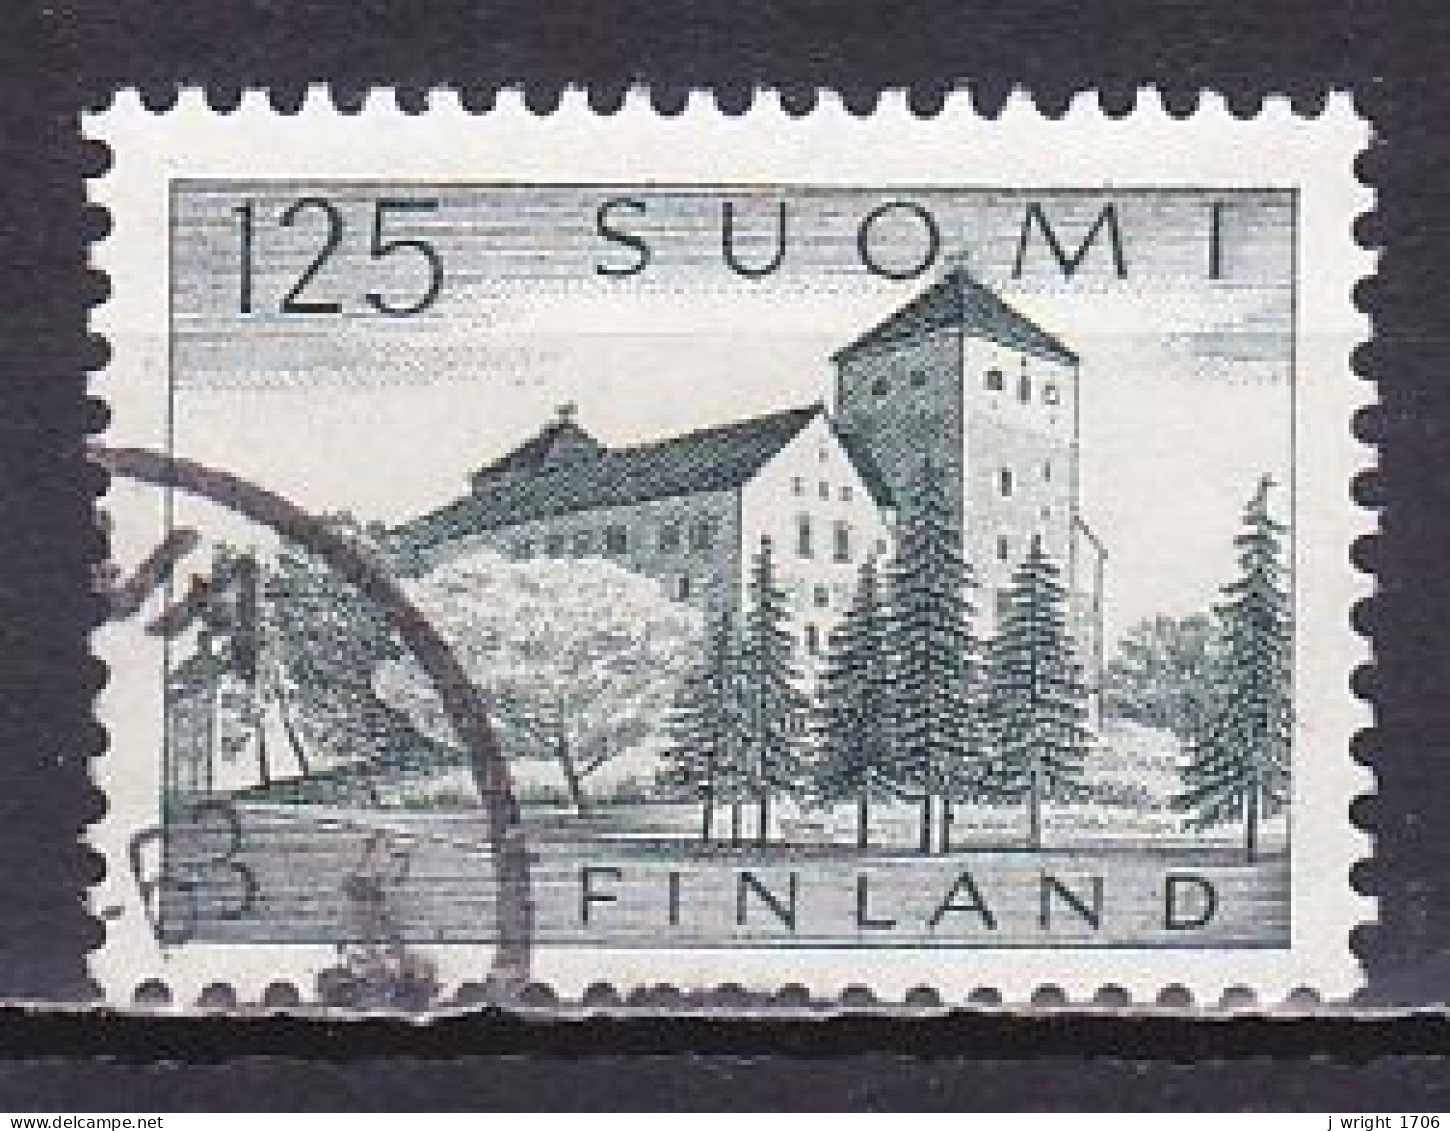 Finland, 1961, Turku Castle, 125mk, USED - Used Stamps